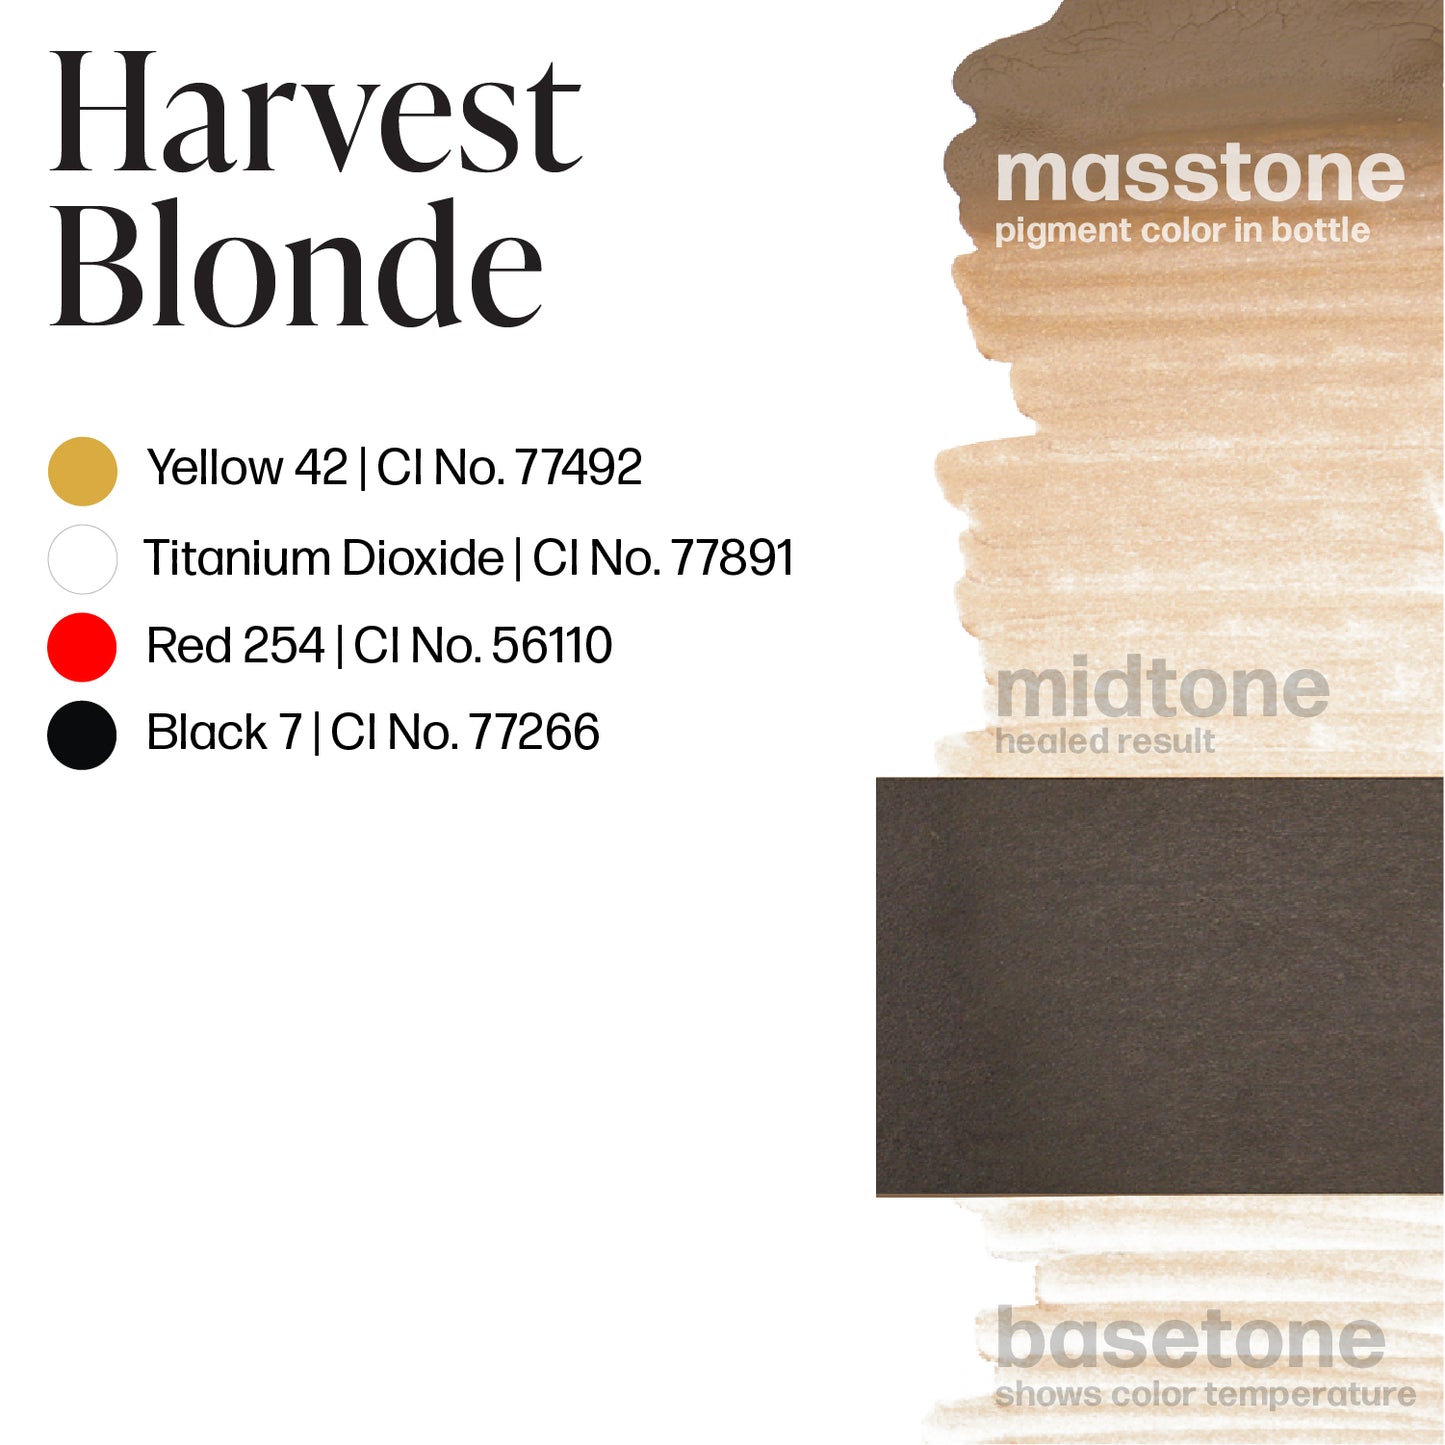 Harvest Blonde